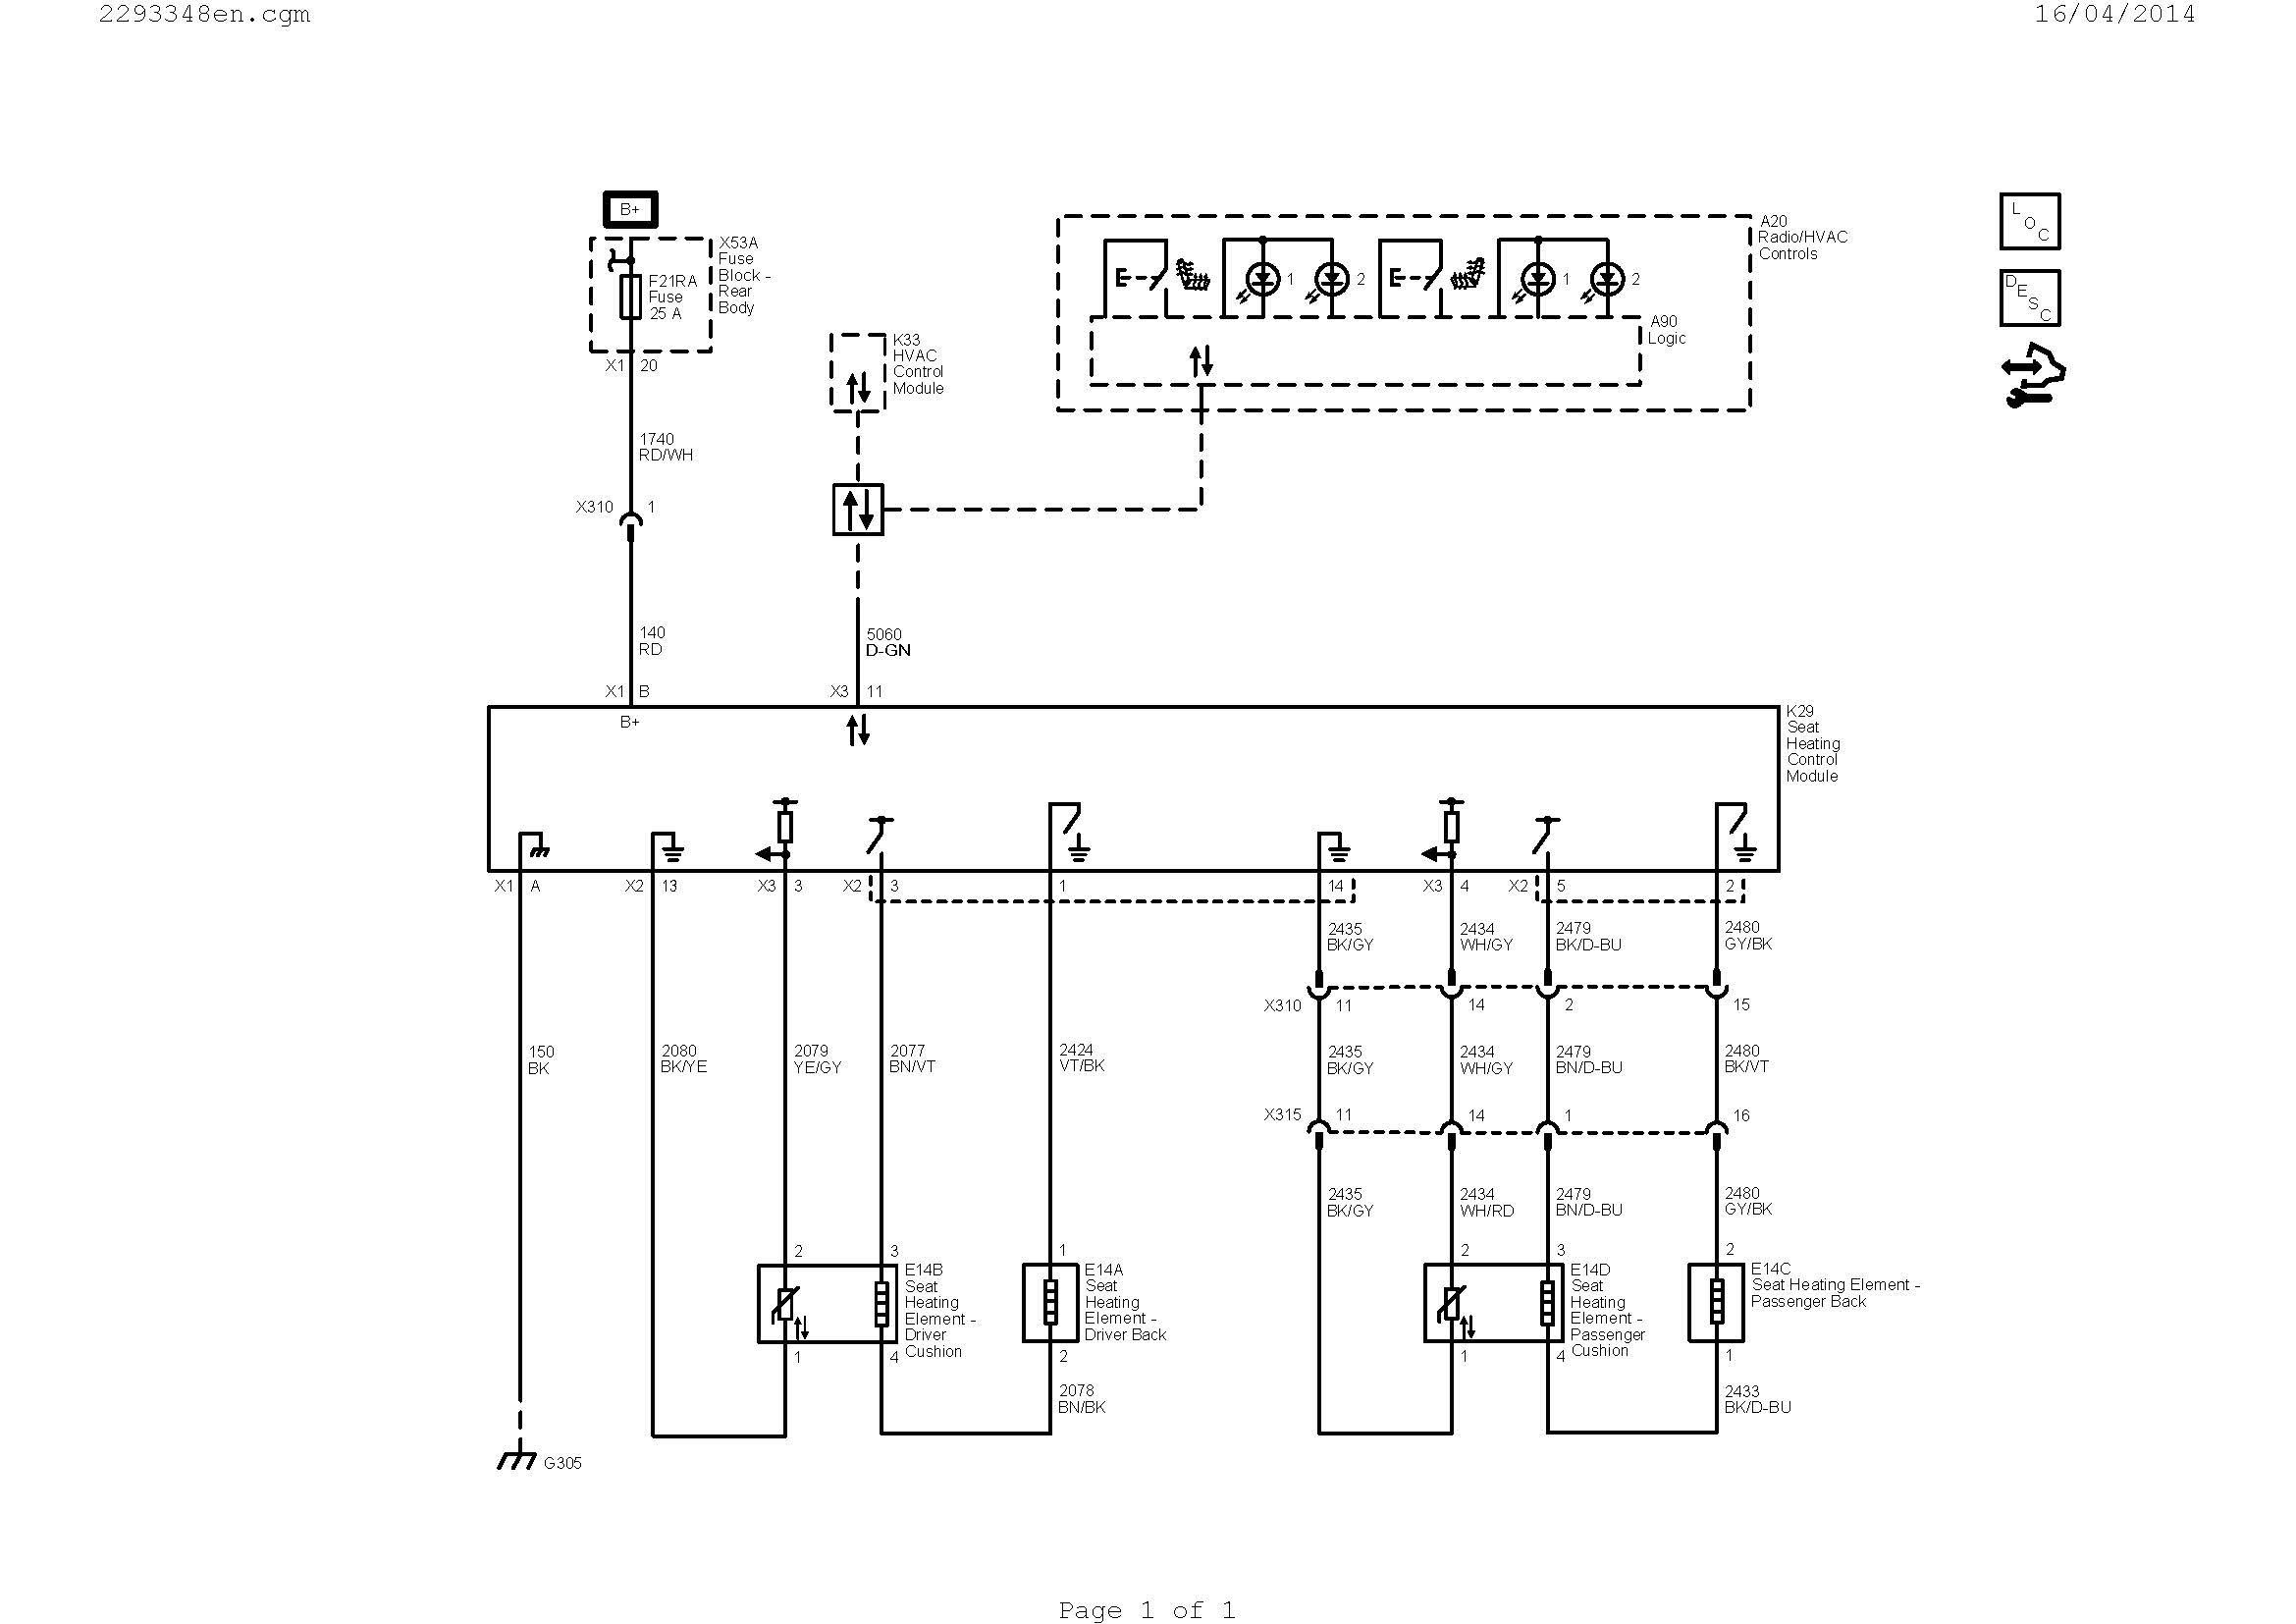 Hvac thermostat Wiring Diagram Wiring A Ac thermostat Diagram New Wiring Diagram Ac Valid Hvac